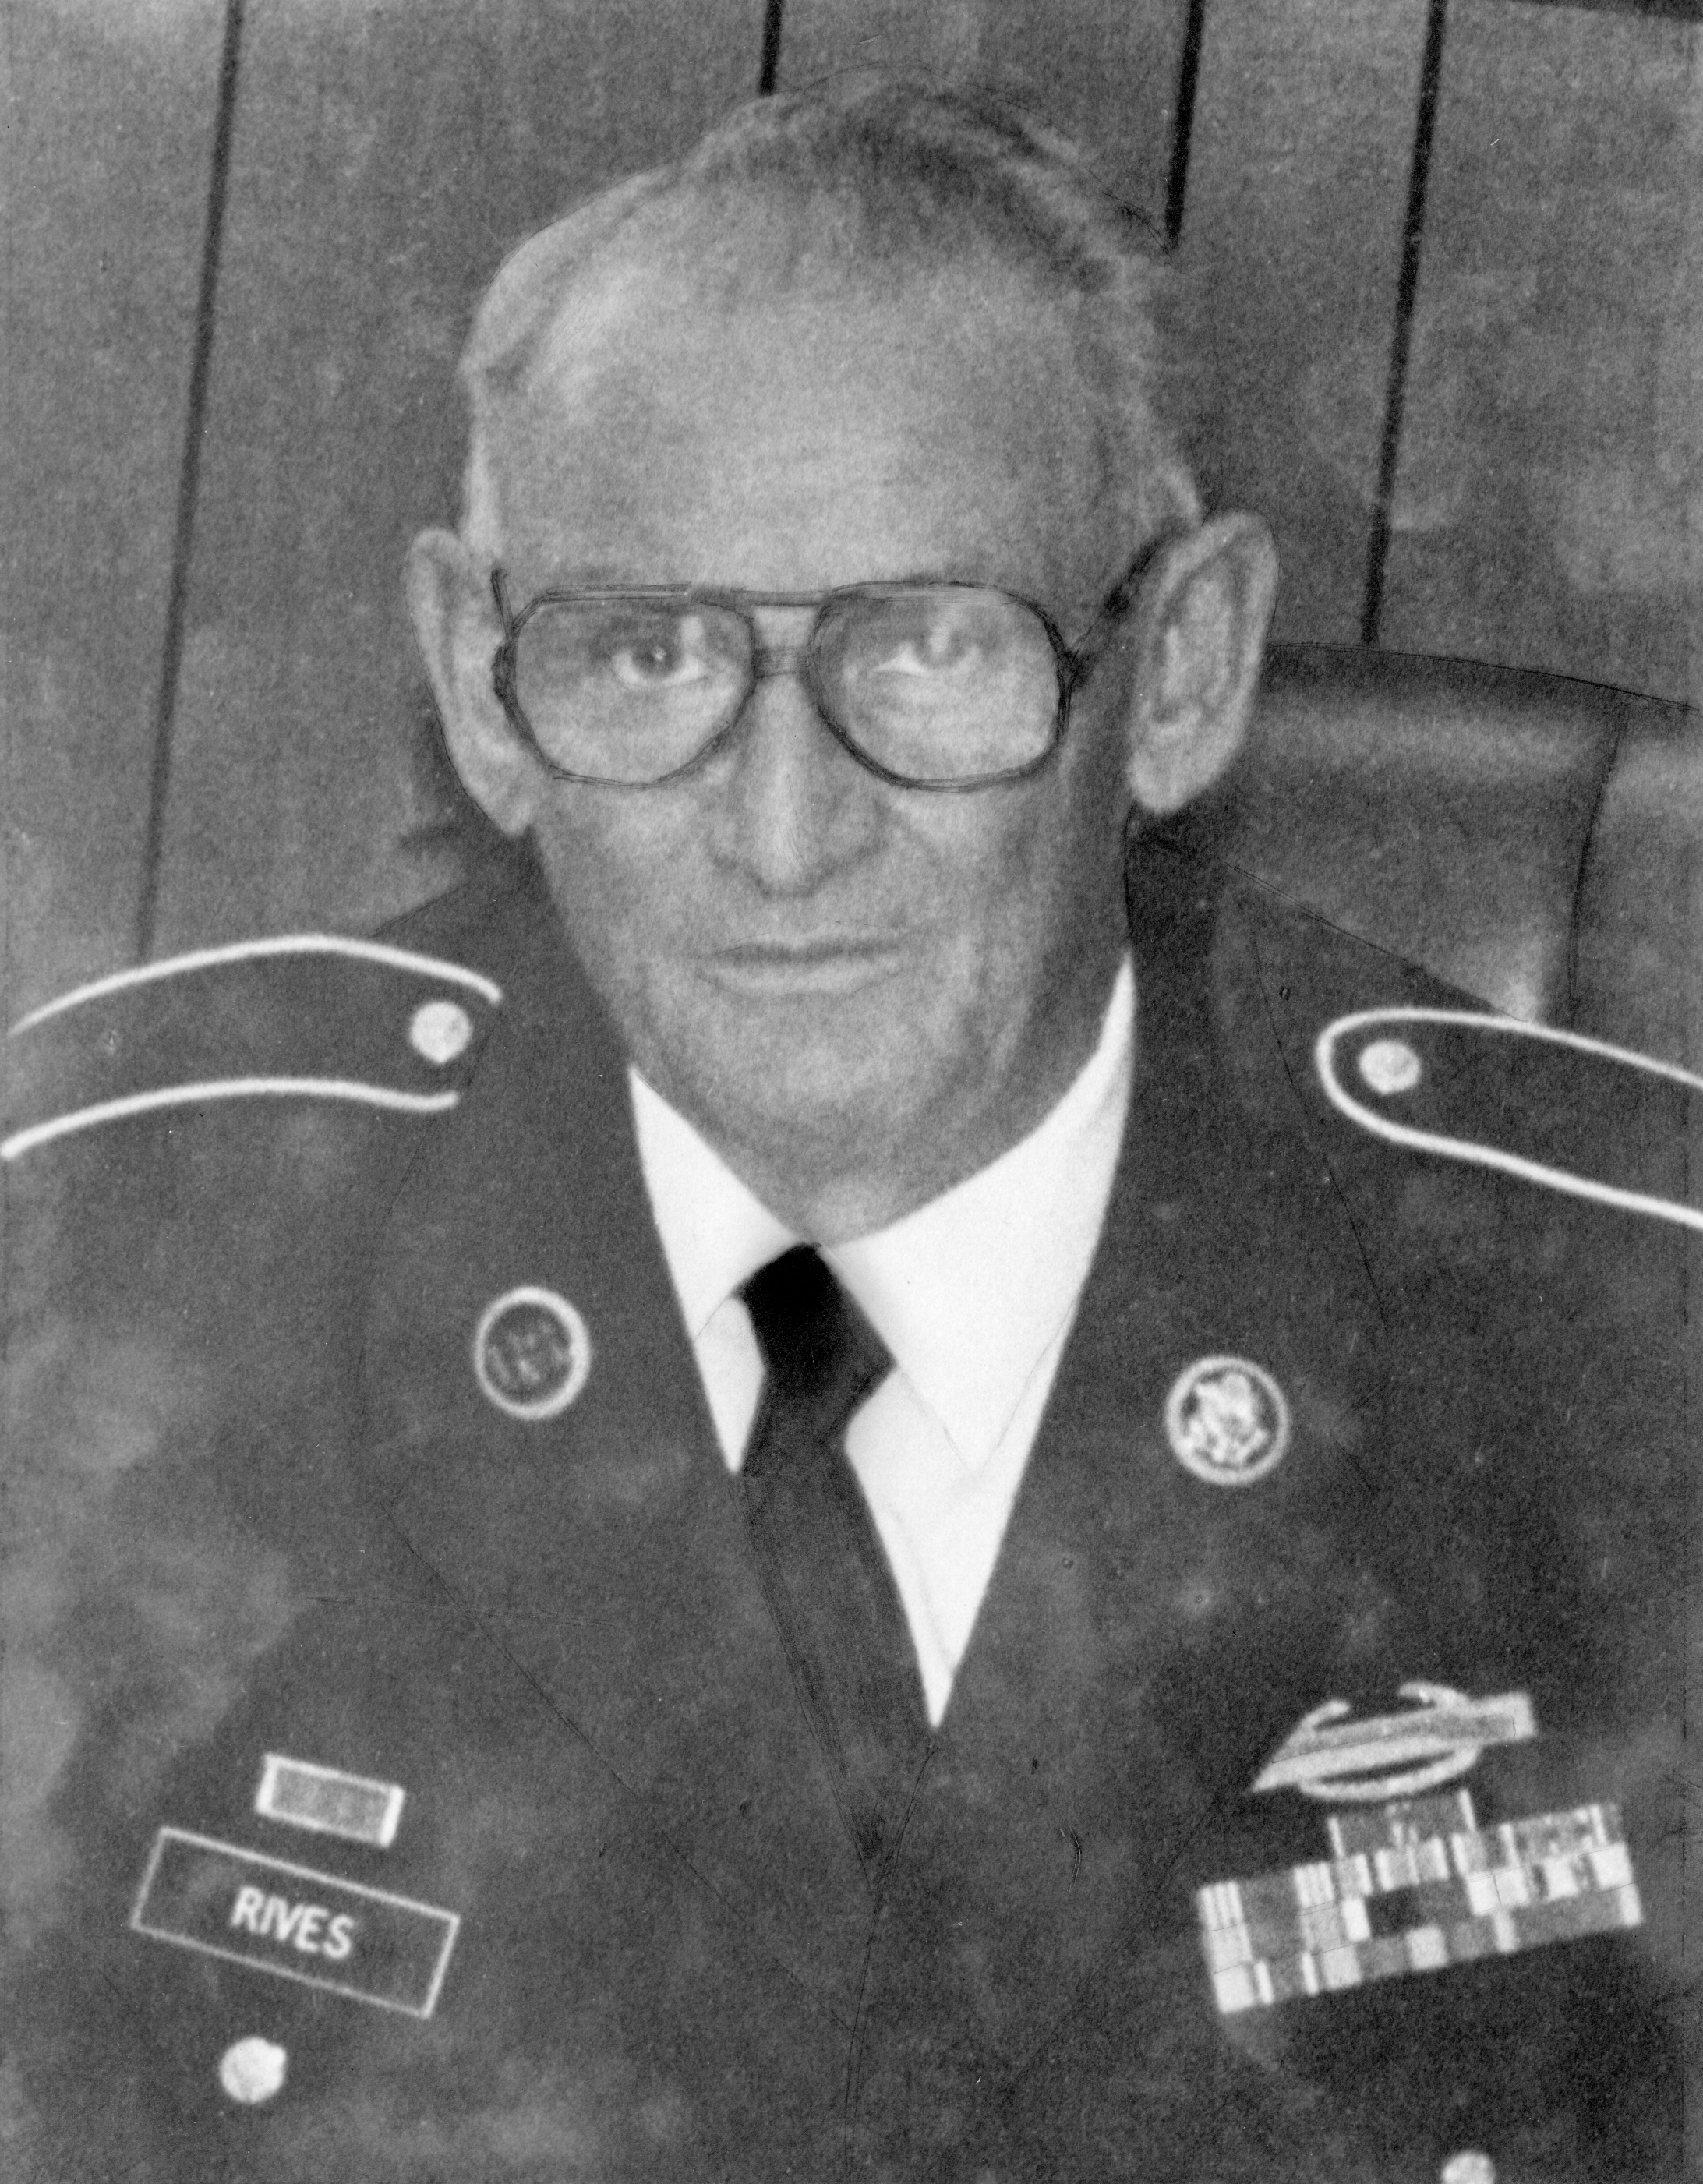 Command Sergeant Major Douglas O.V. Rives